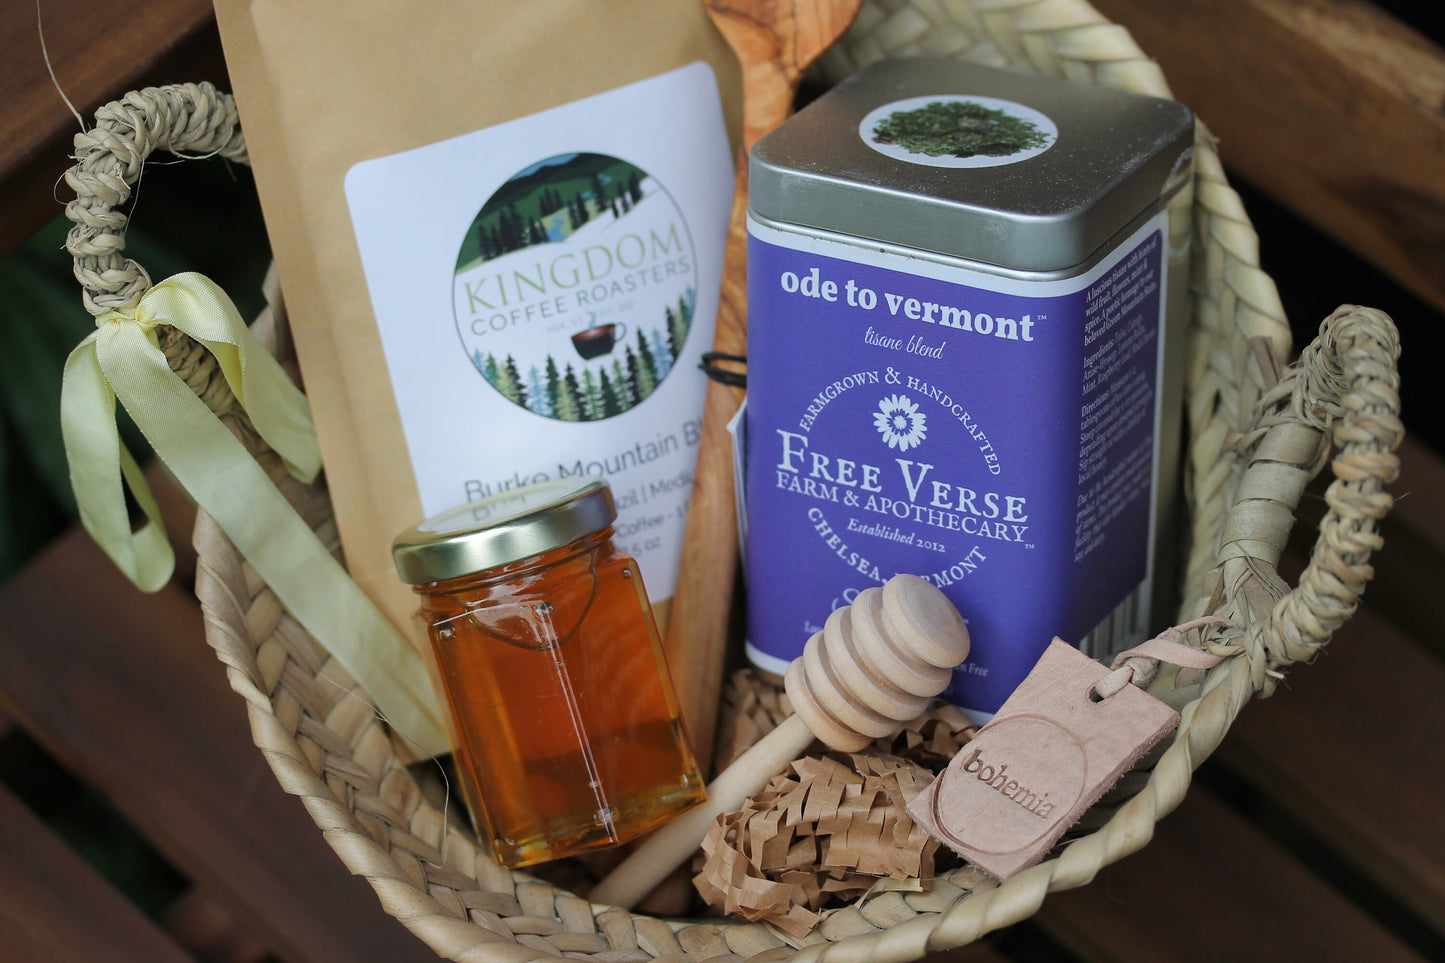 Coffee, Tea and VT, Delicious Set of Delights, Tea, Coffee, Honey, Tea Party, Thank You, Hostess Gift, Vermont Gift. Vermont Tea